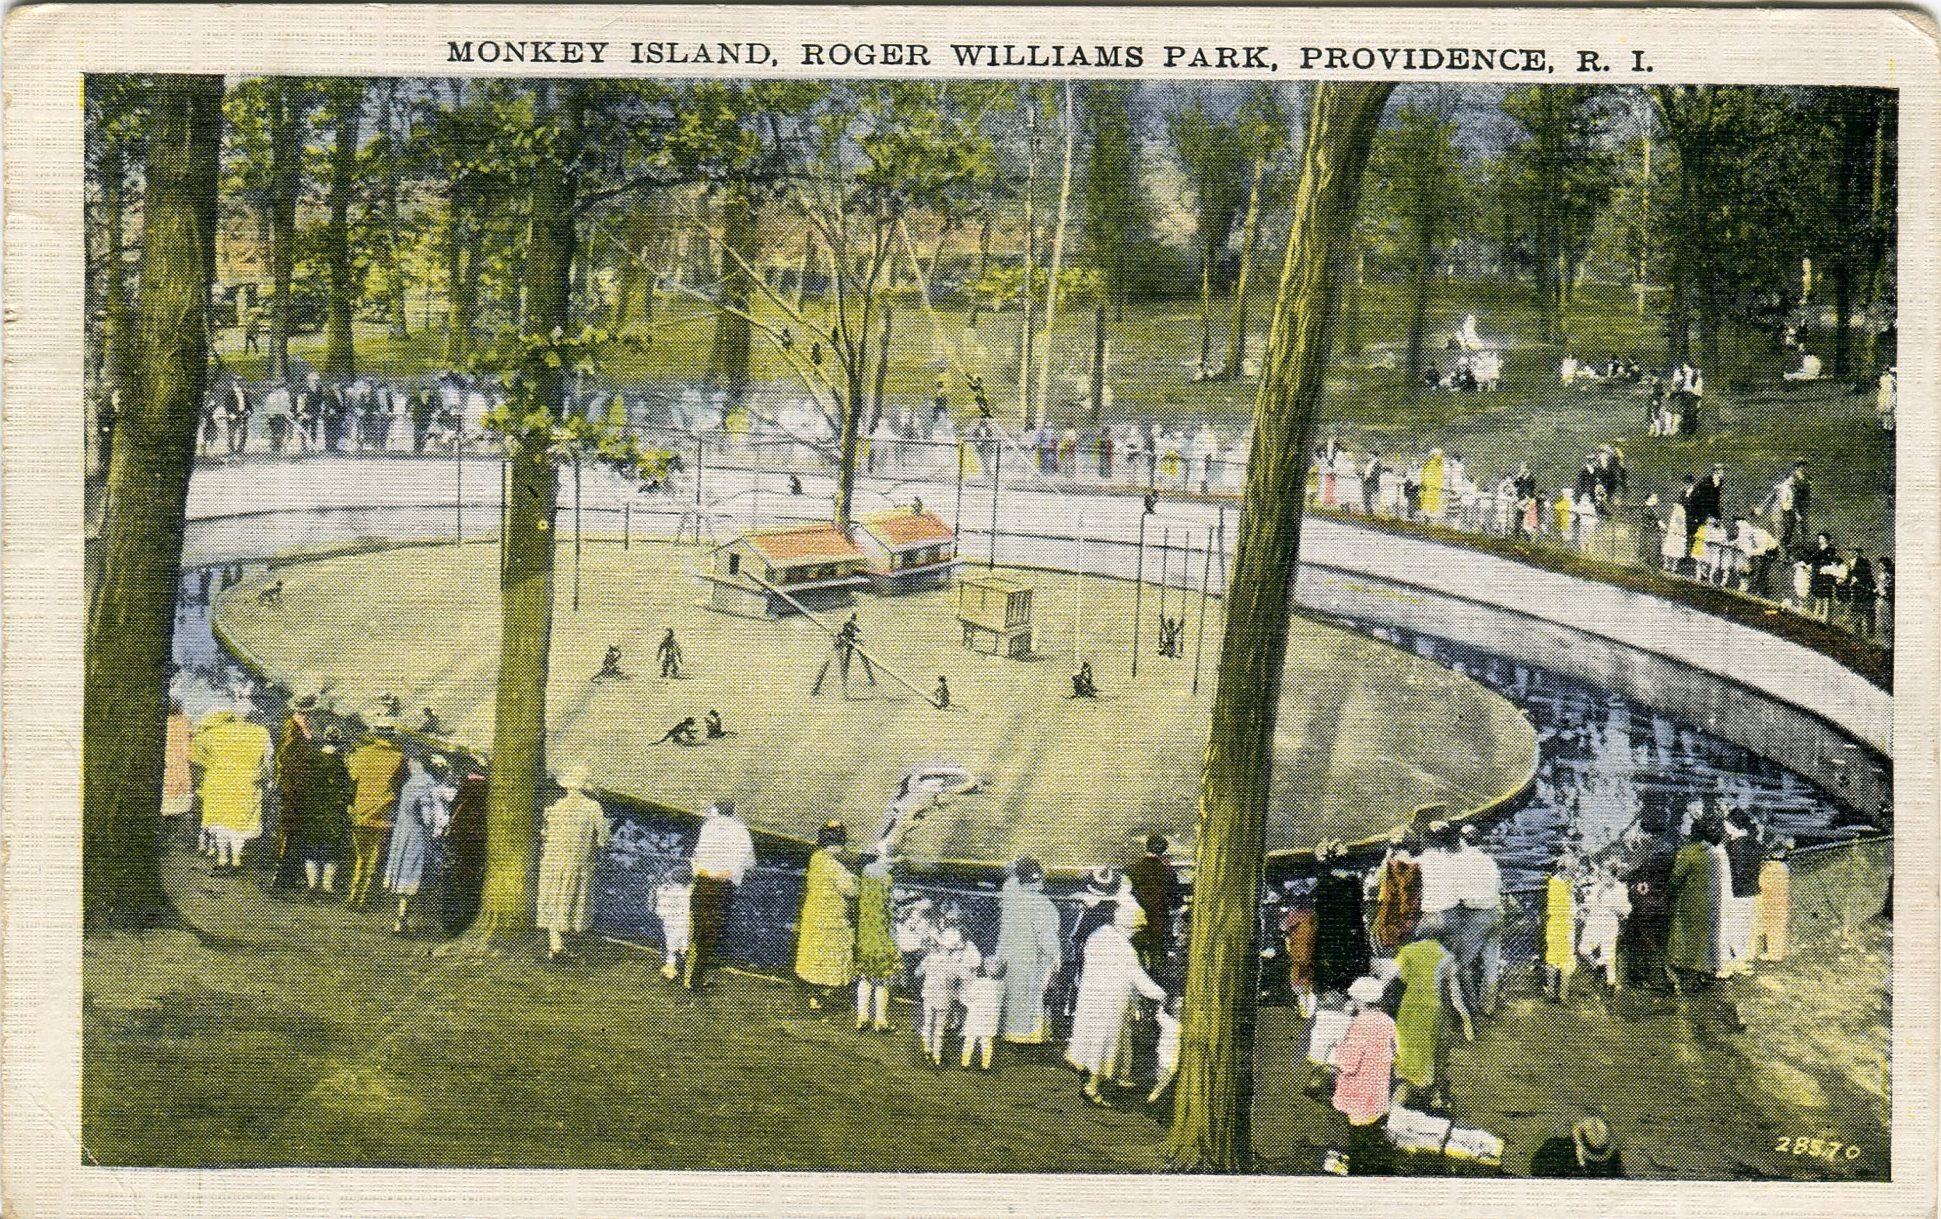 Monkey Island Postcard 1920s.jpg